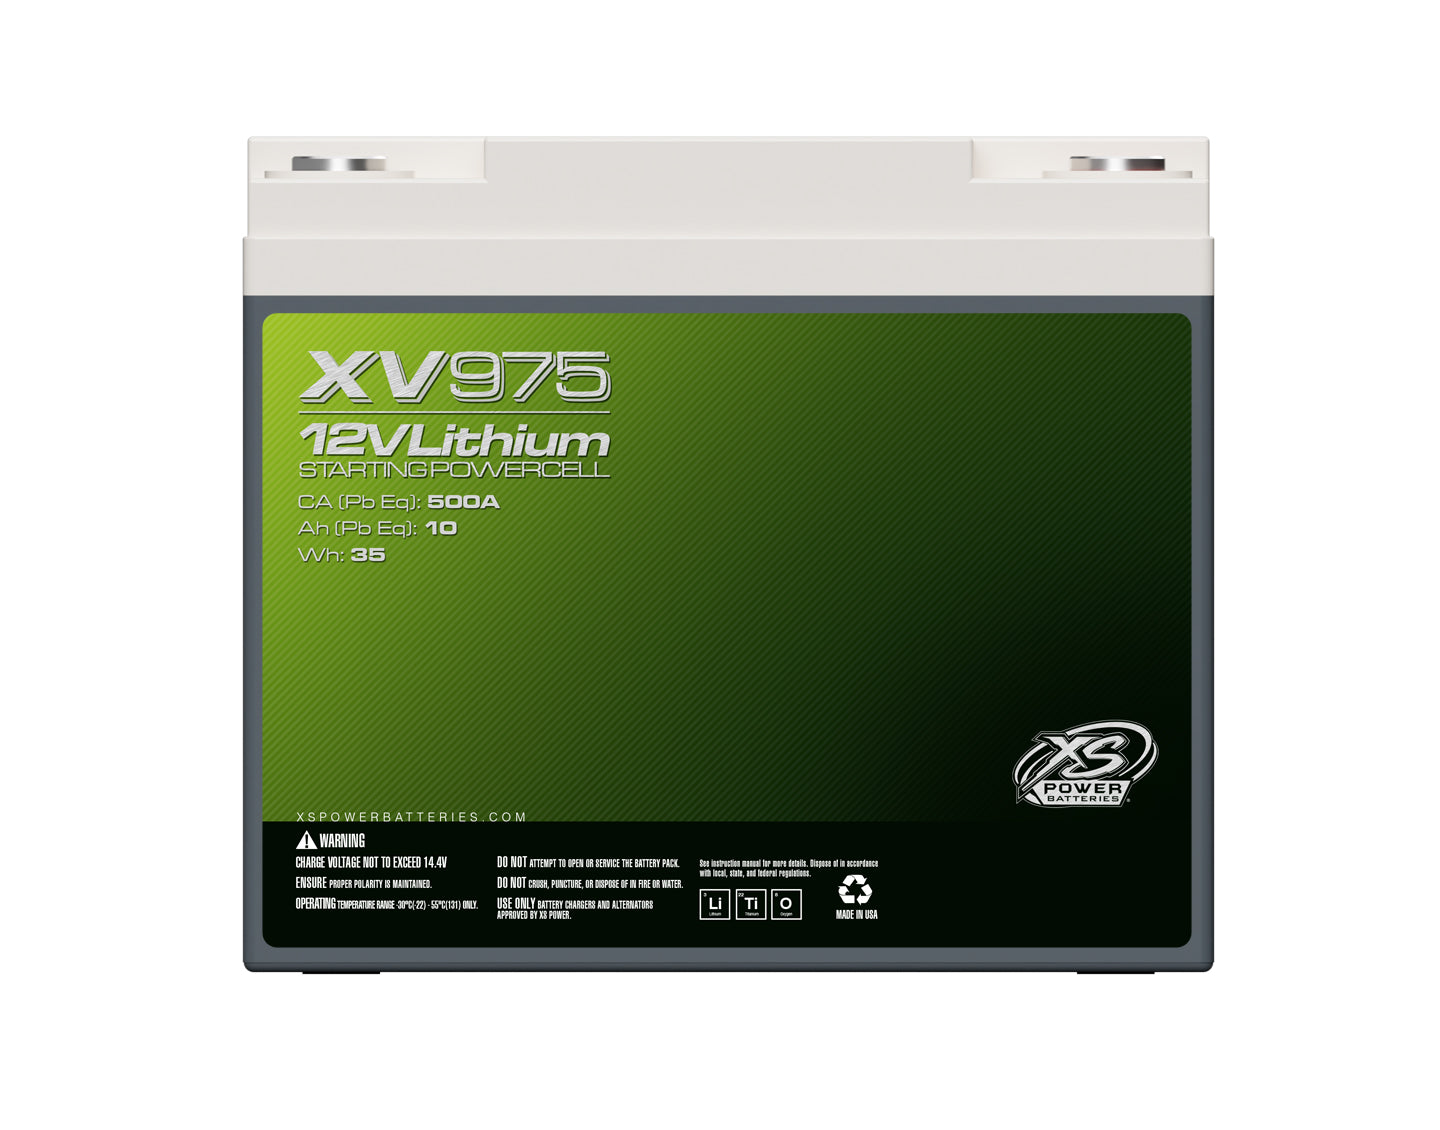 XV975 XS Power 12VDC Group U1R Lithium LTO Underhood-Safe Vehicle Battery 750W 35Wh